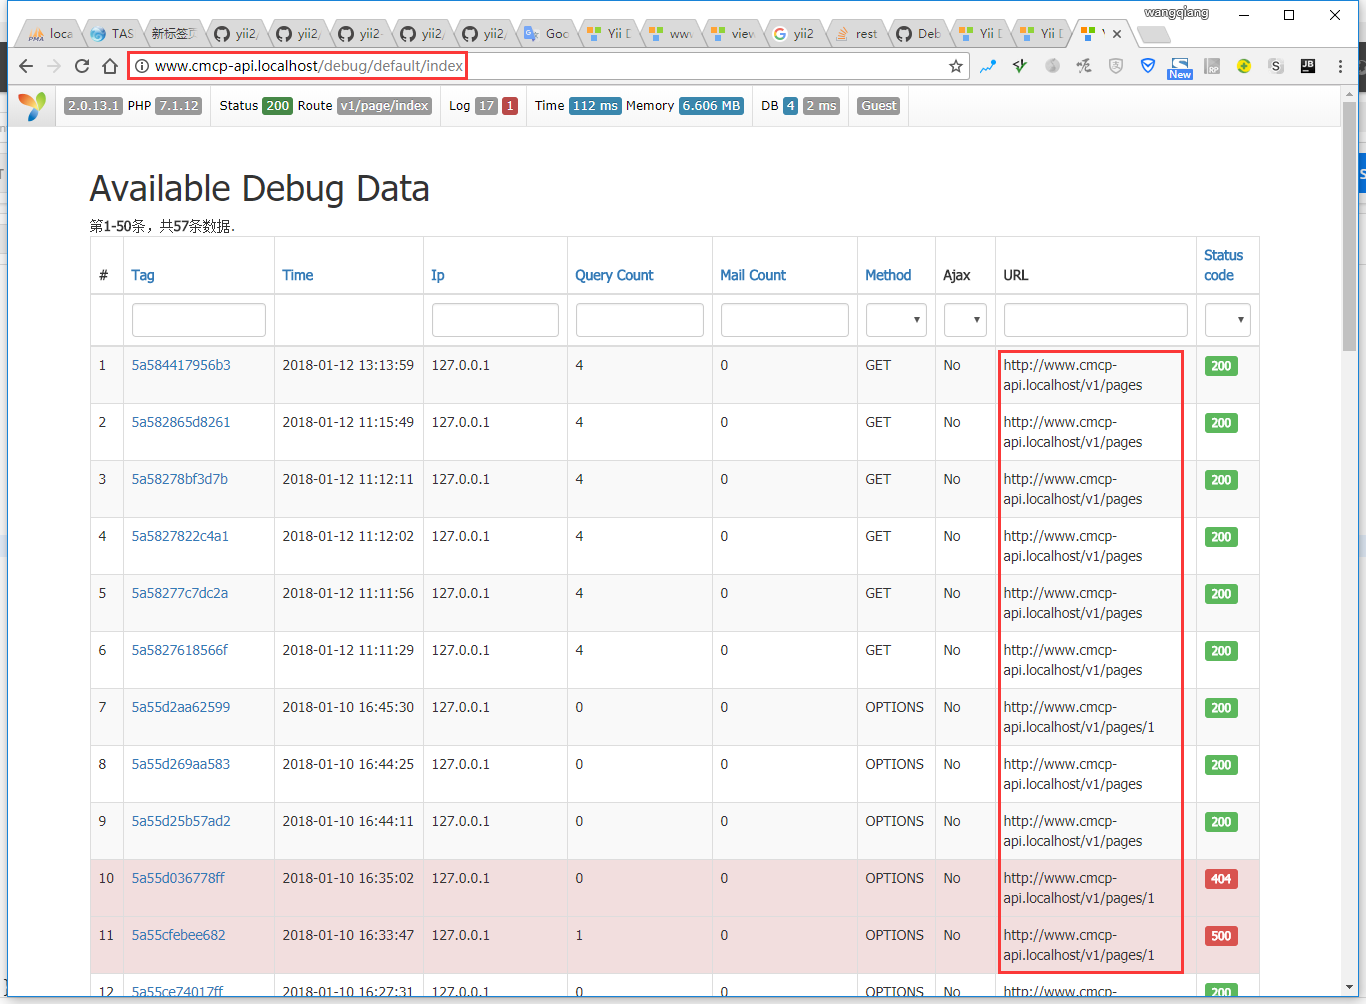 分析得出前端应用的调试器的网址，只需要将 frontend 替换为 www，便是接口应用的调试器的网址，打开：http://www.cmcp-api.localhost/debug/default/index